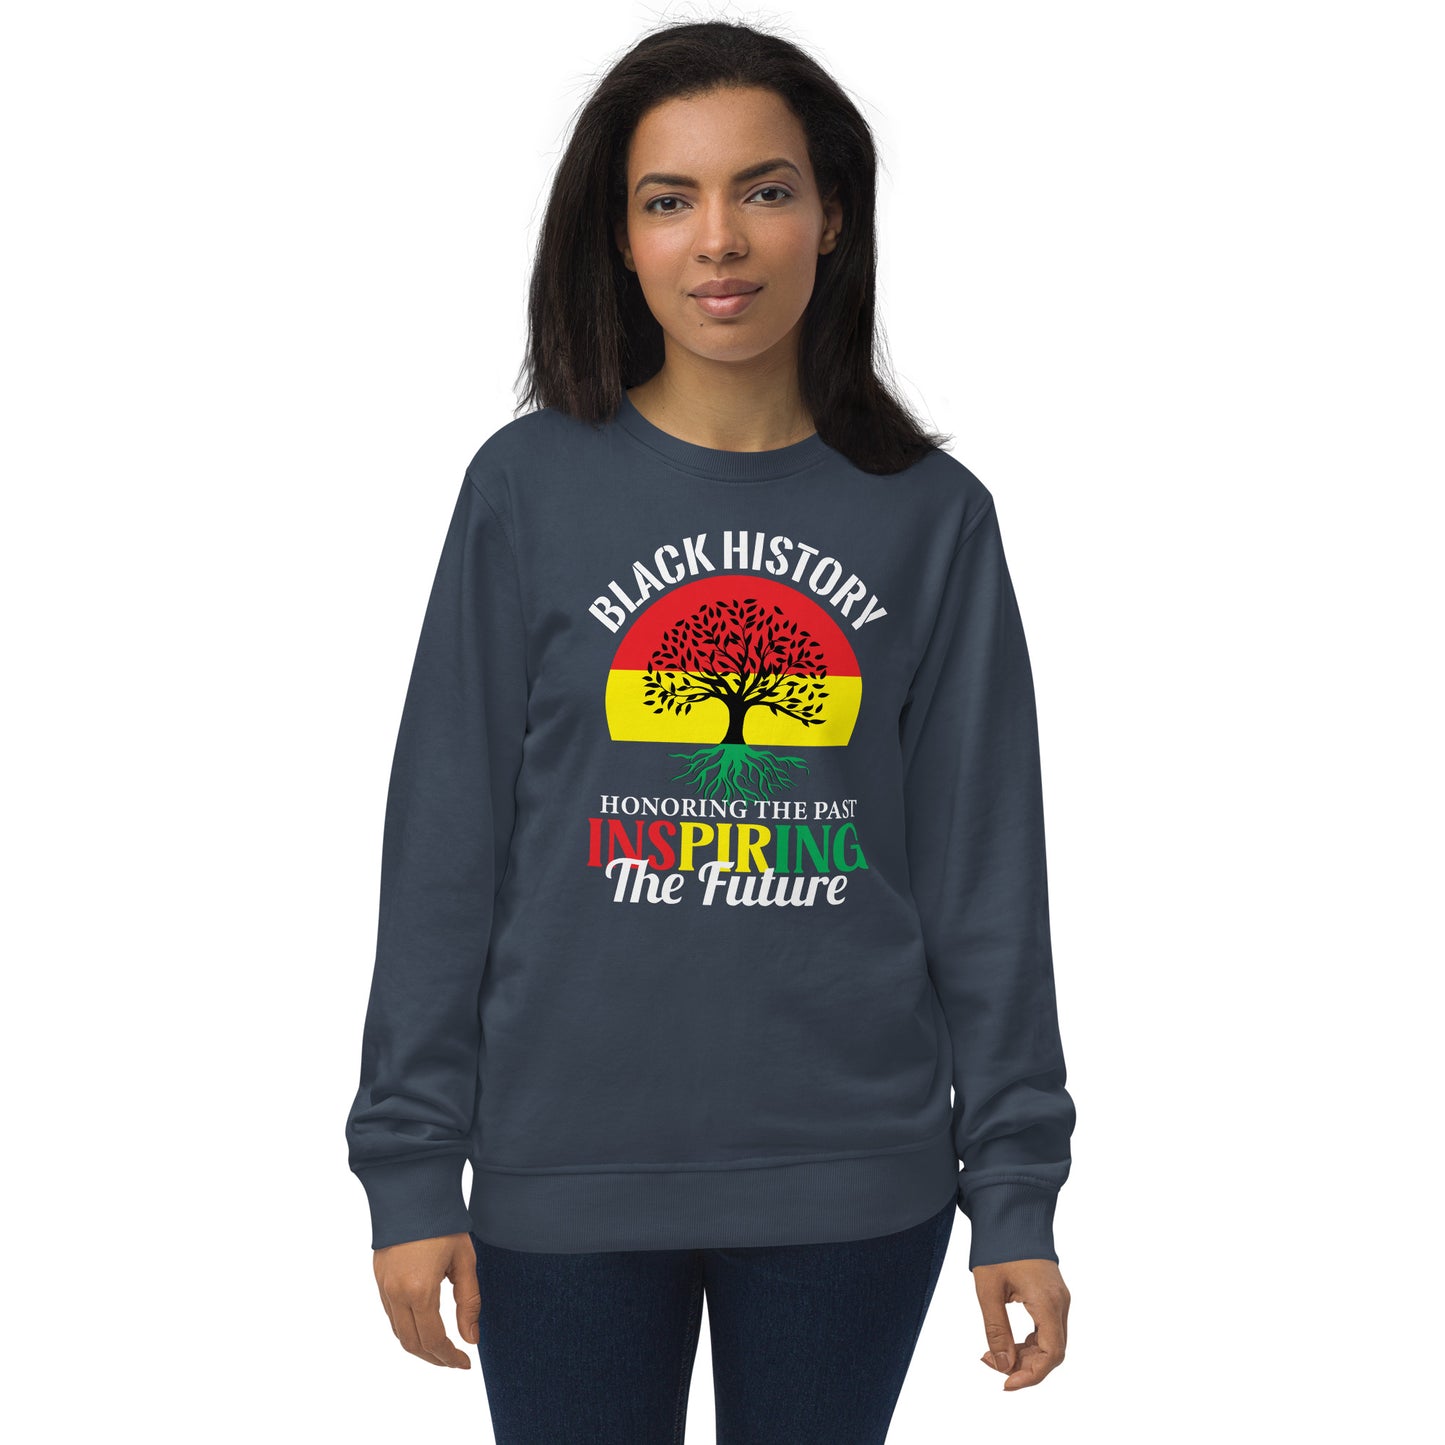 Unisex organic sweatshirt - Black History Remembering the Past Inspiring the Future